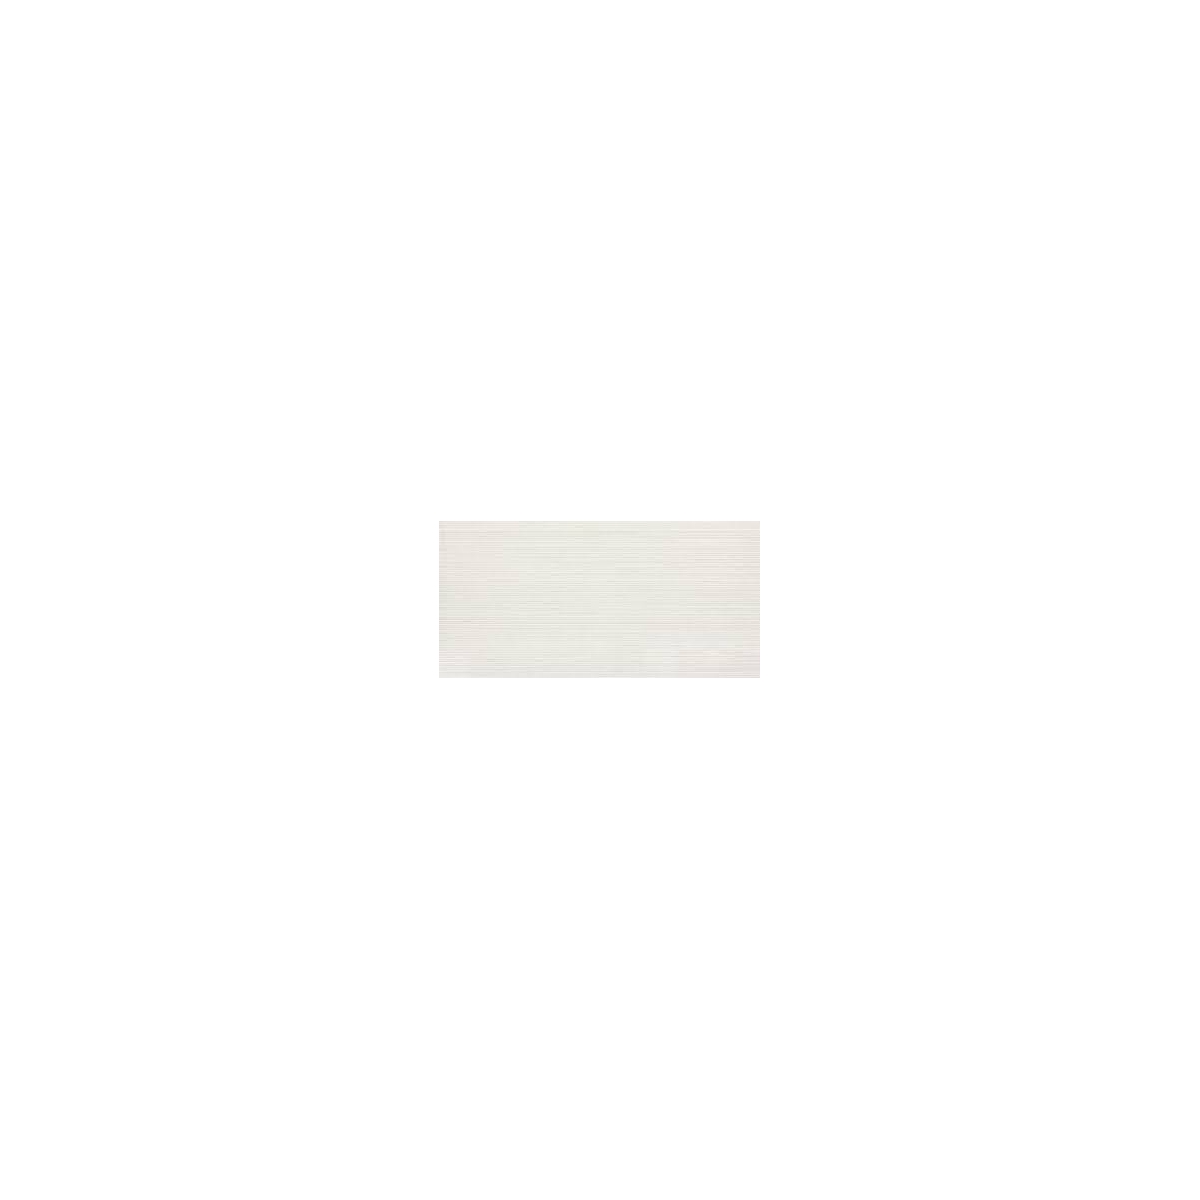 Infinity Blanco (Caja de 1 m2)